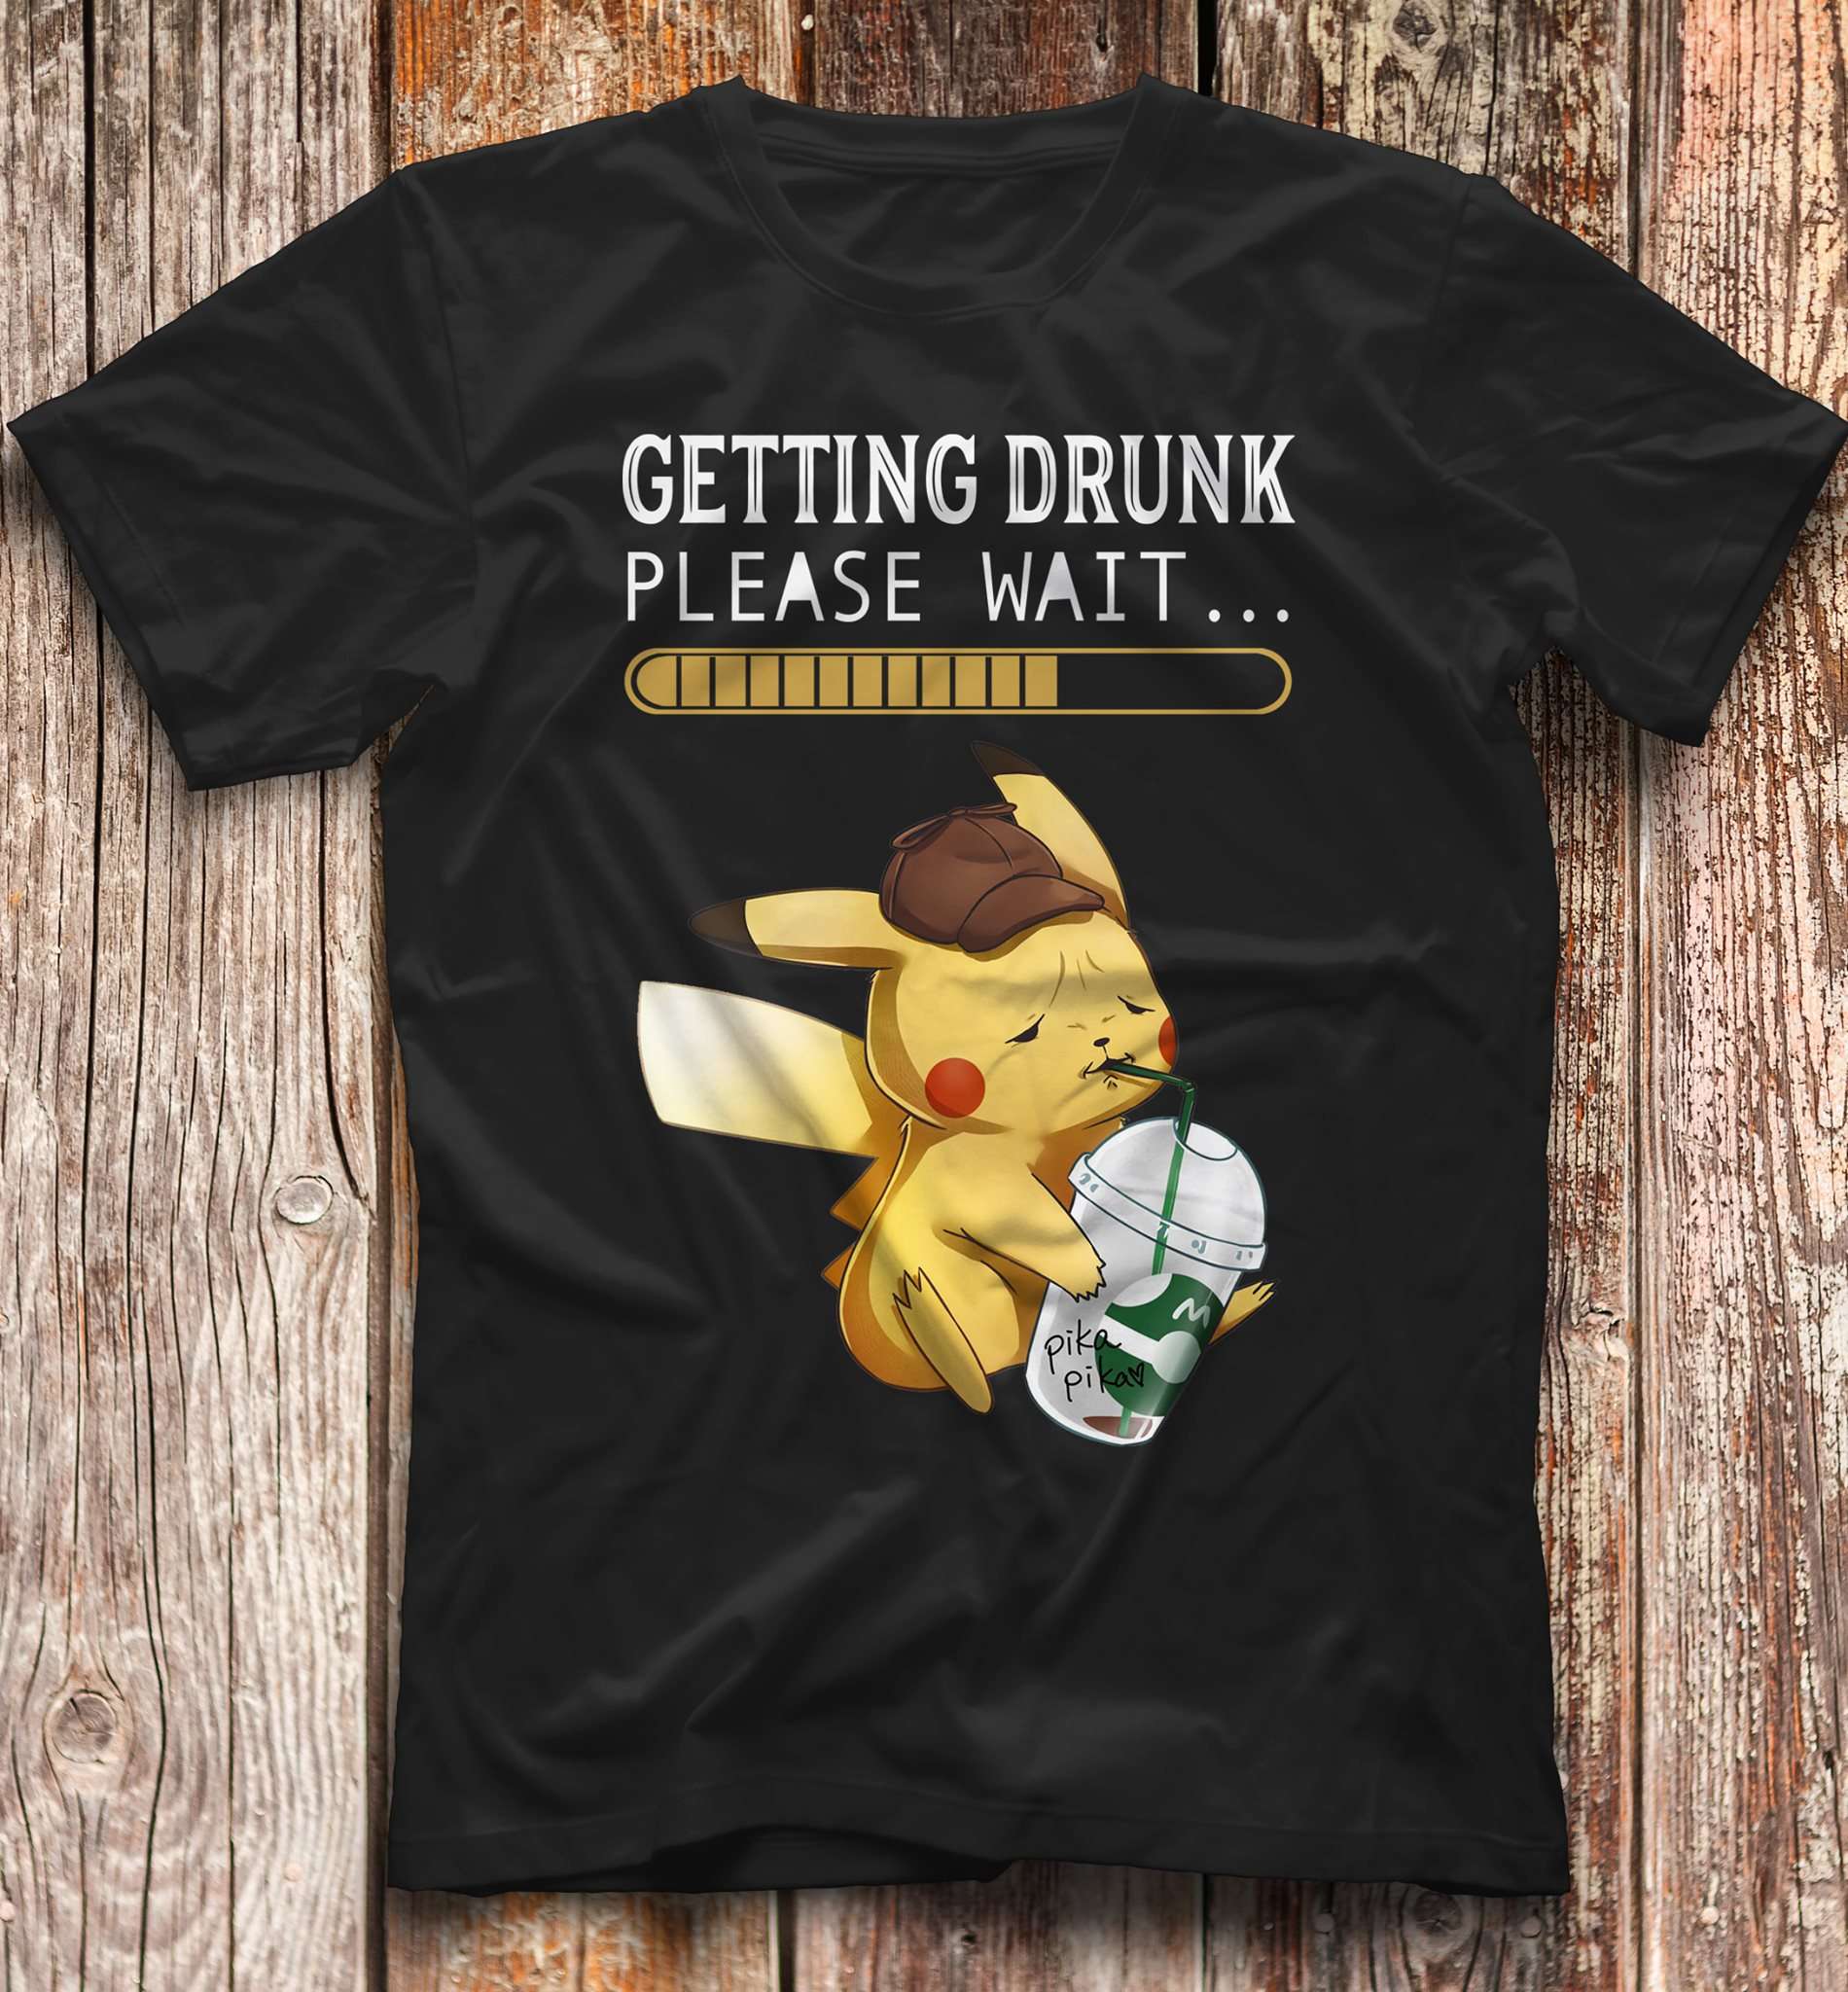 Love Pikachu - Getting drunk please wait